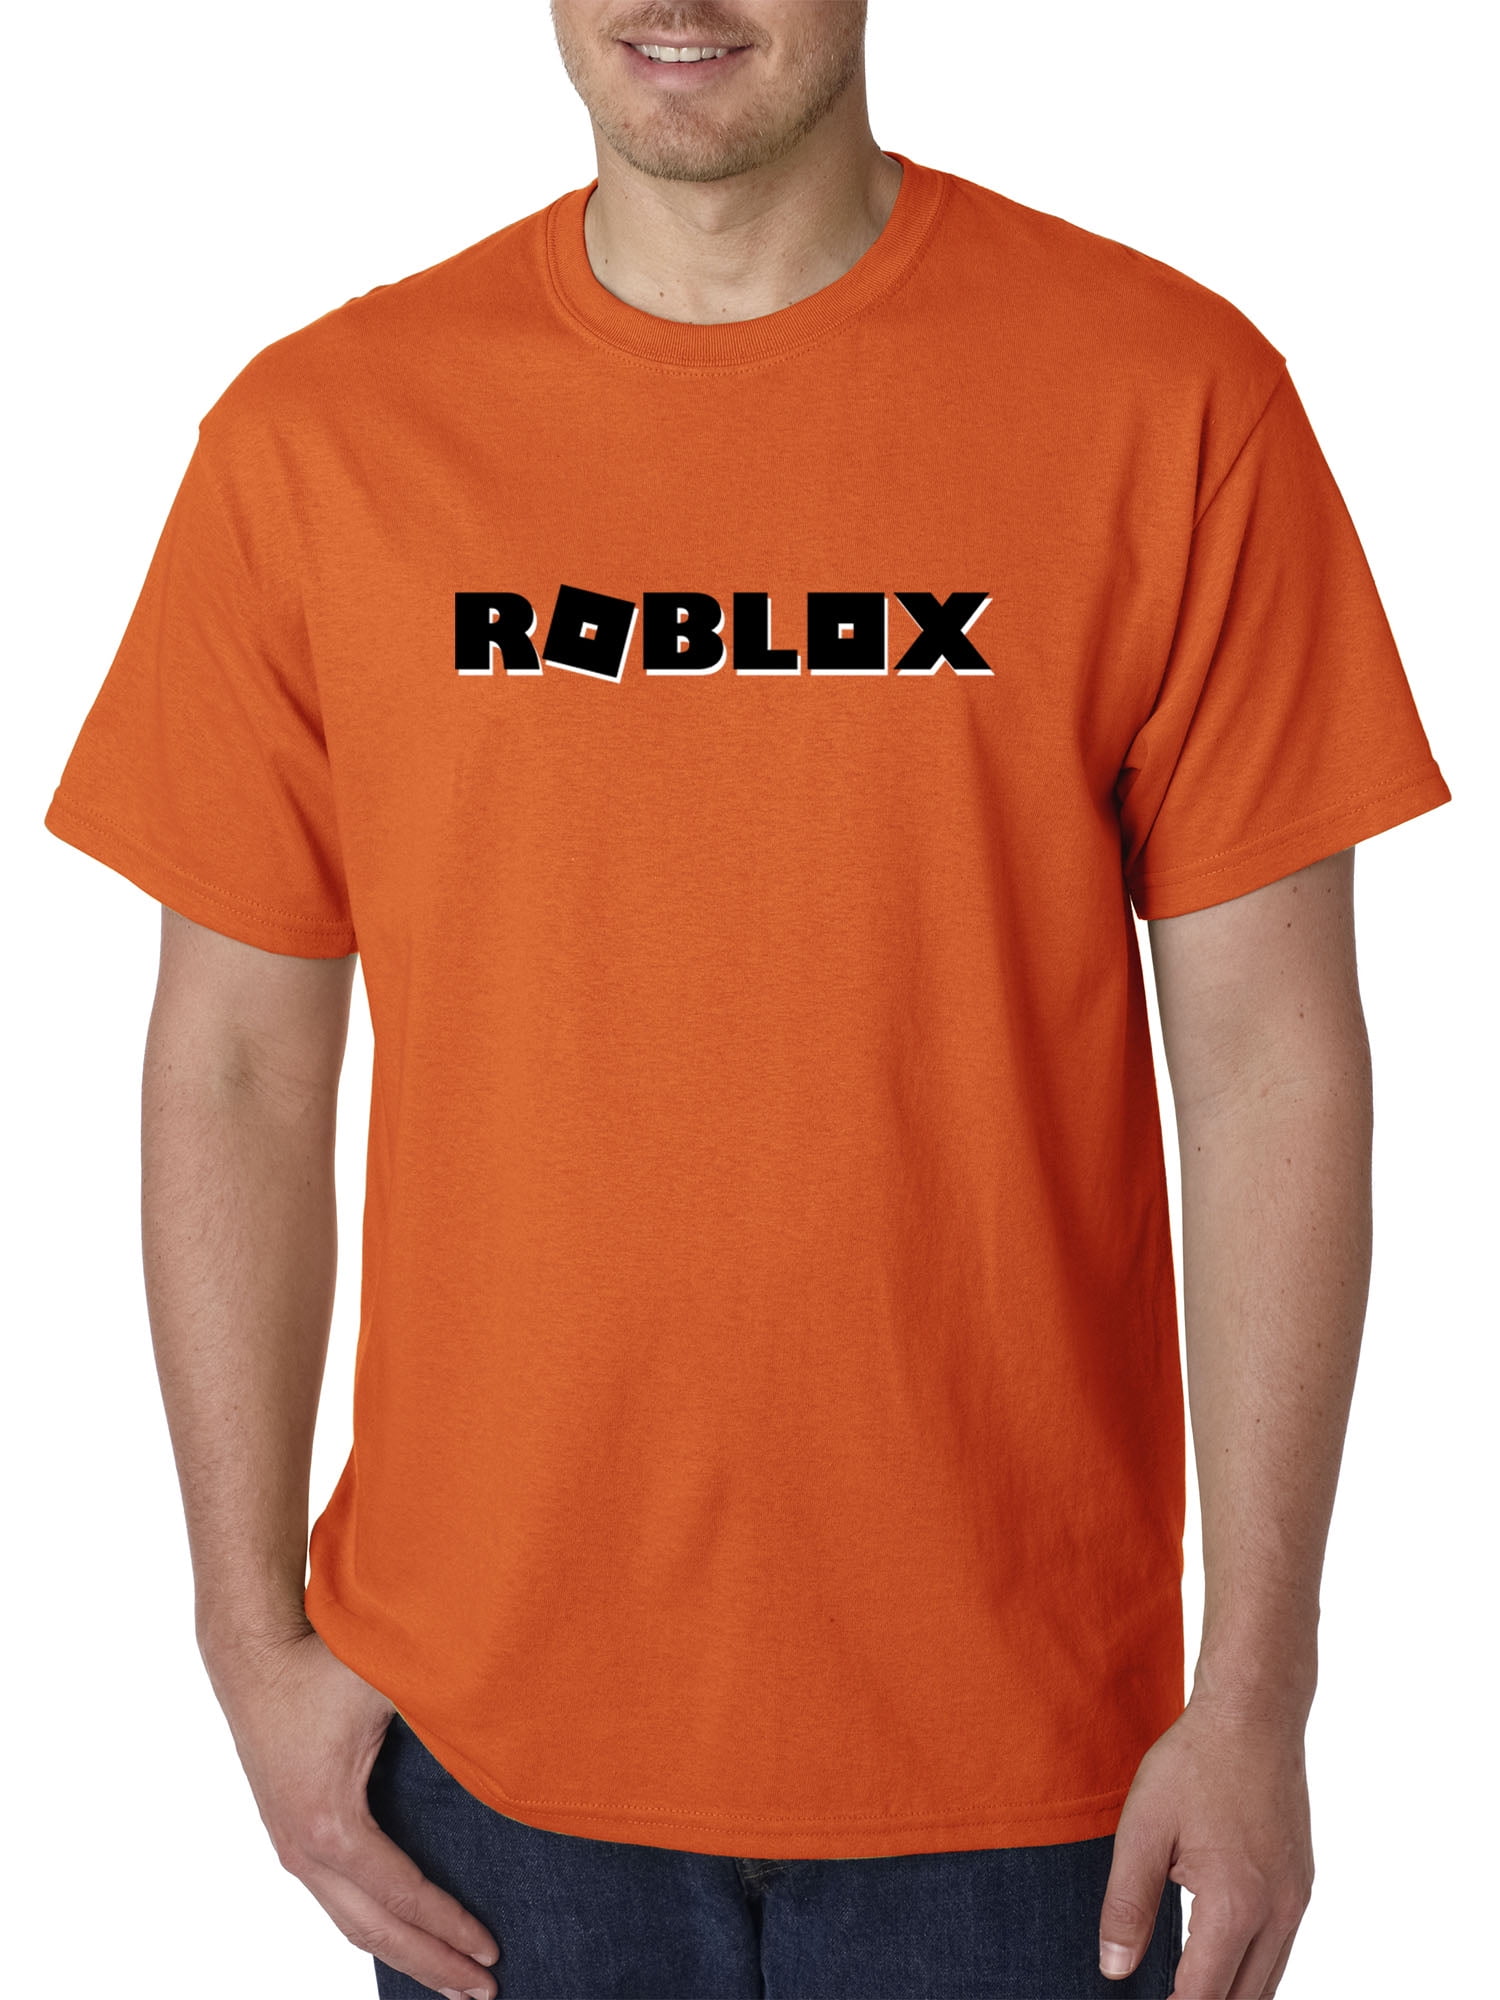 New Way New Way 1168 Unisex T Shirt Roblox Block Logo Game Accent Small Orange Walmart Com Walmart Com - roblox t shirt orange